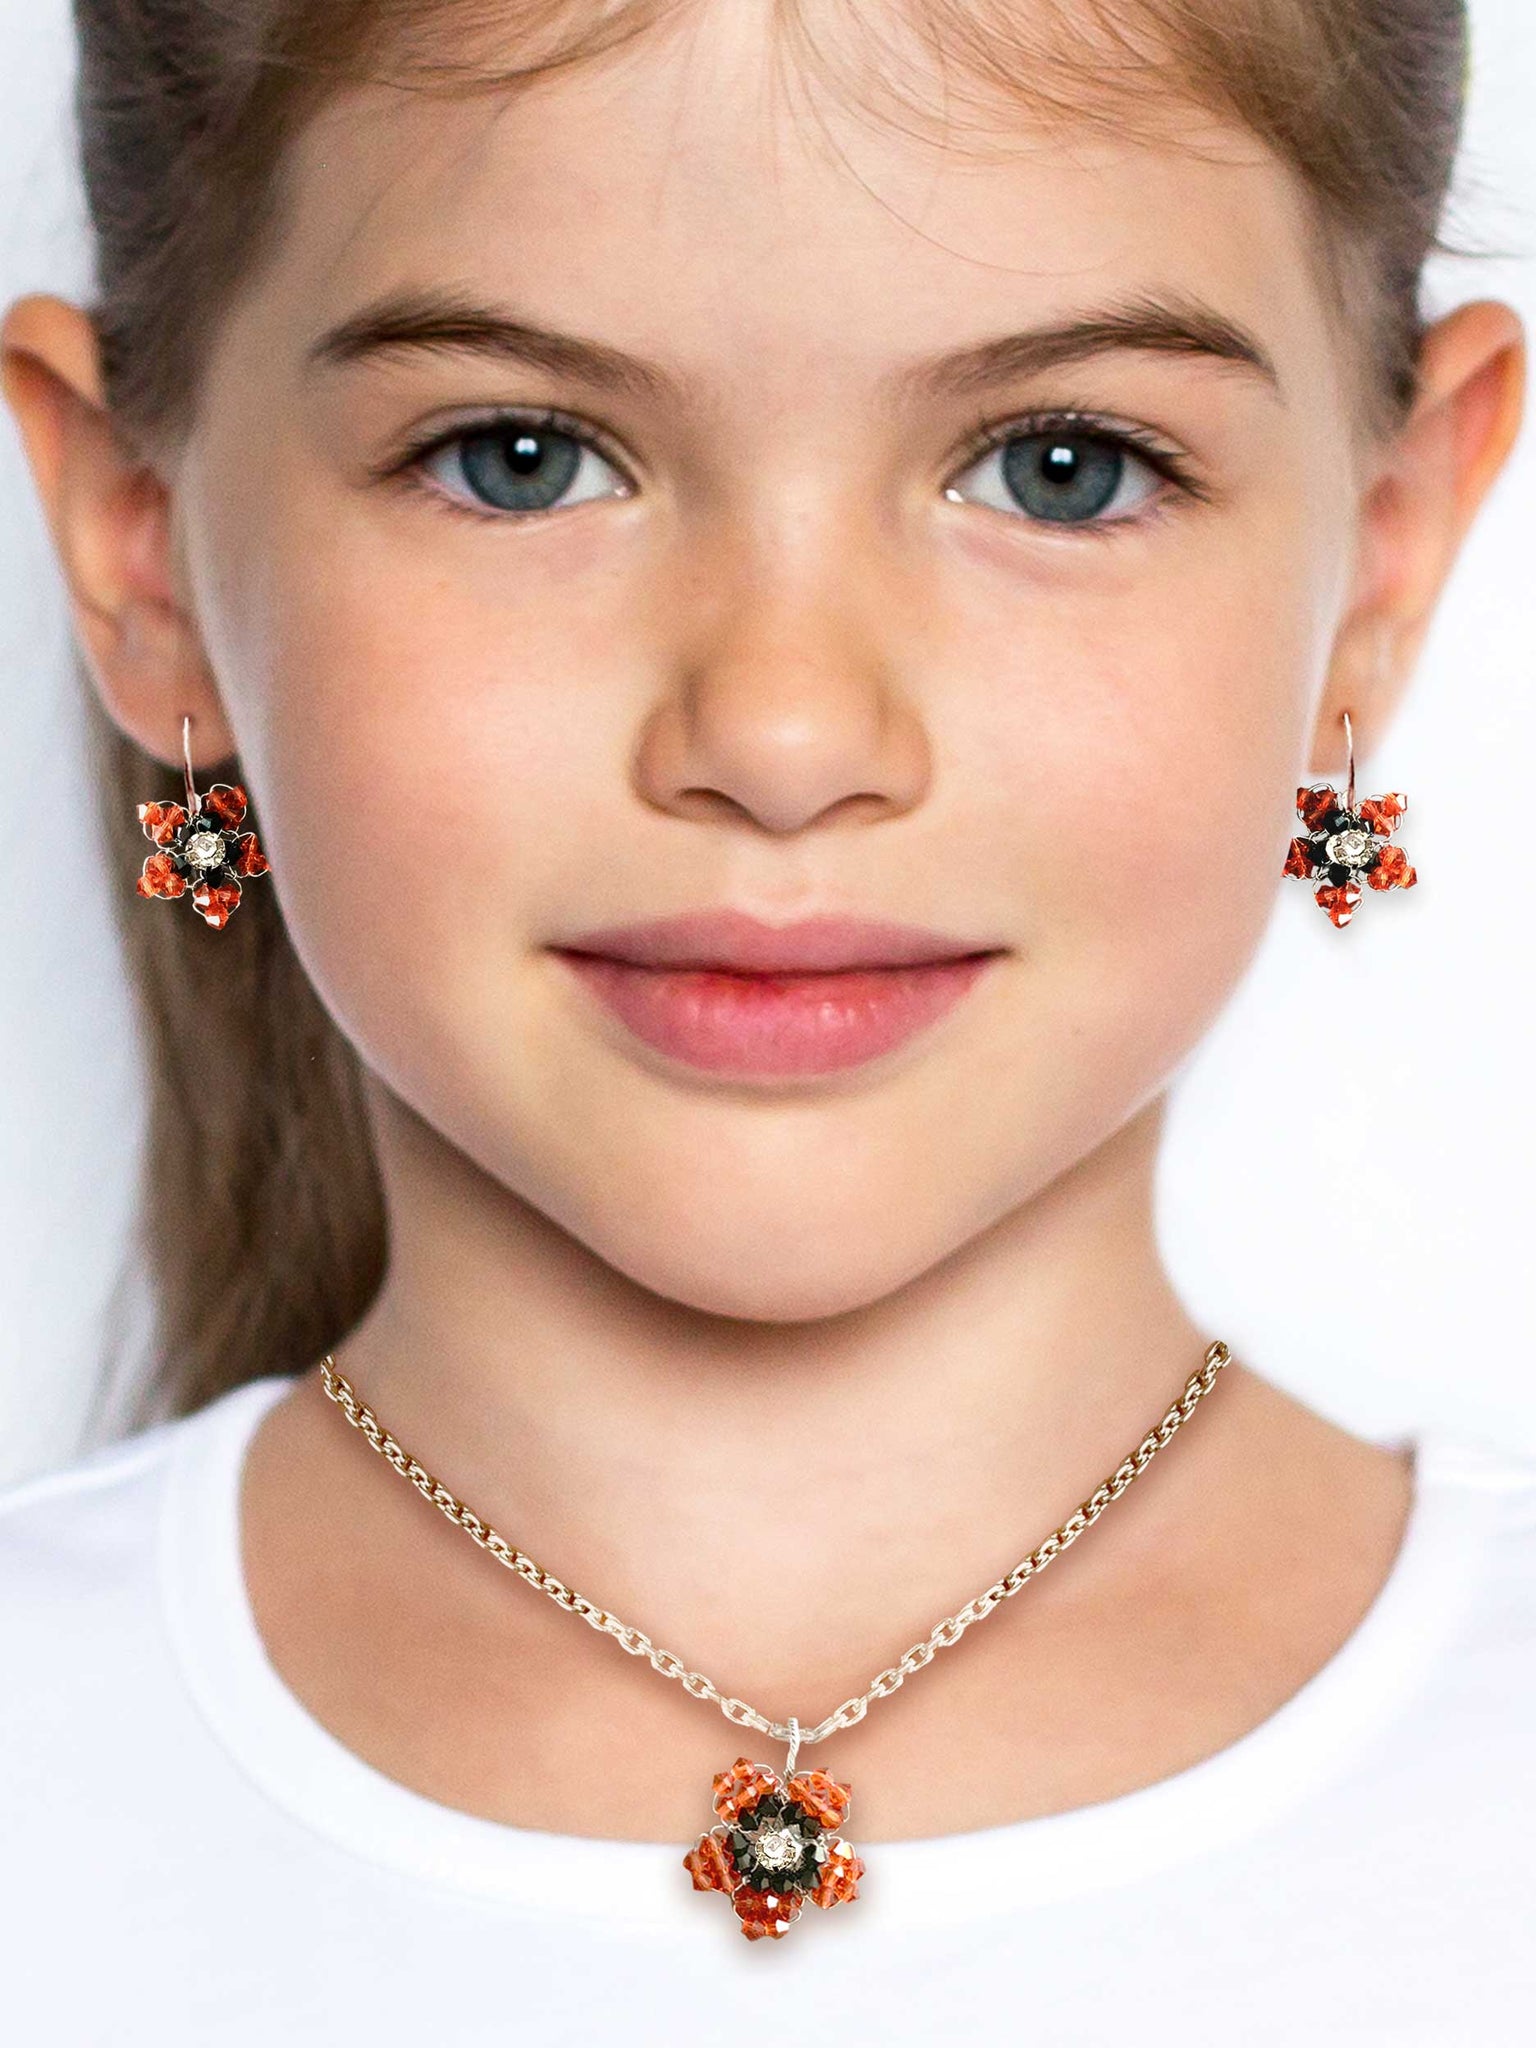 NKF X-Small Earrings Only (Child Size Earrings)